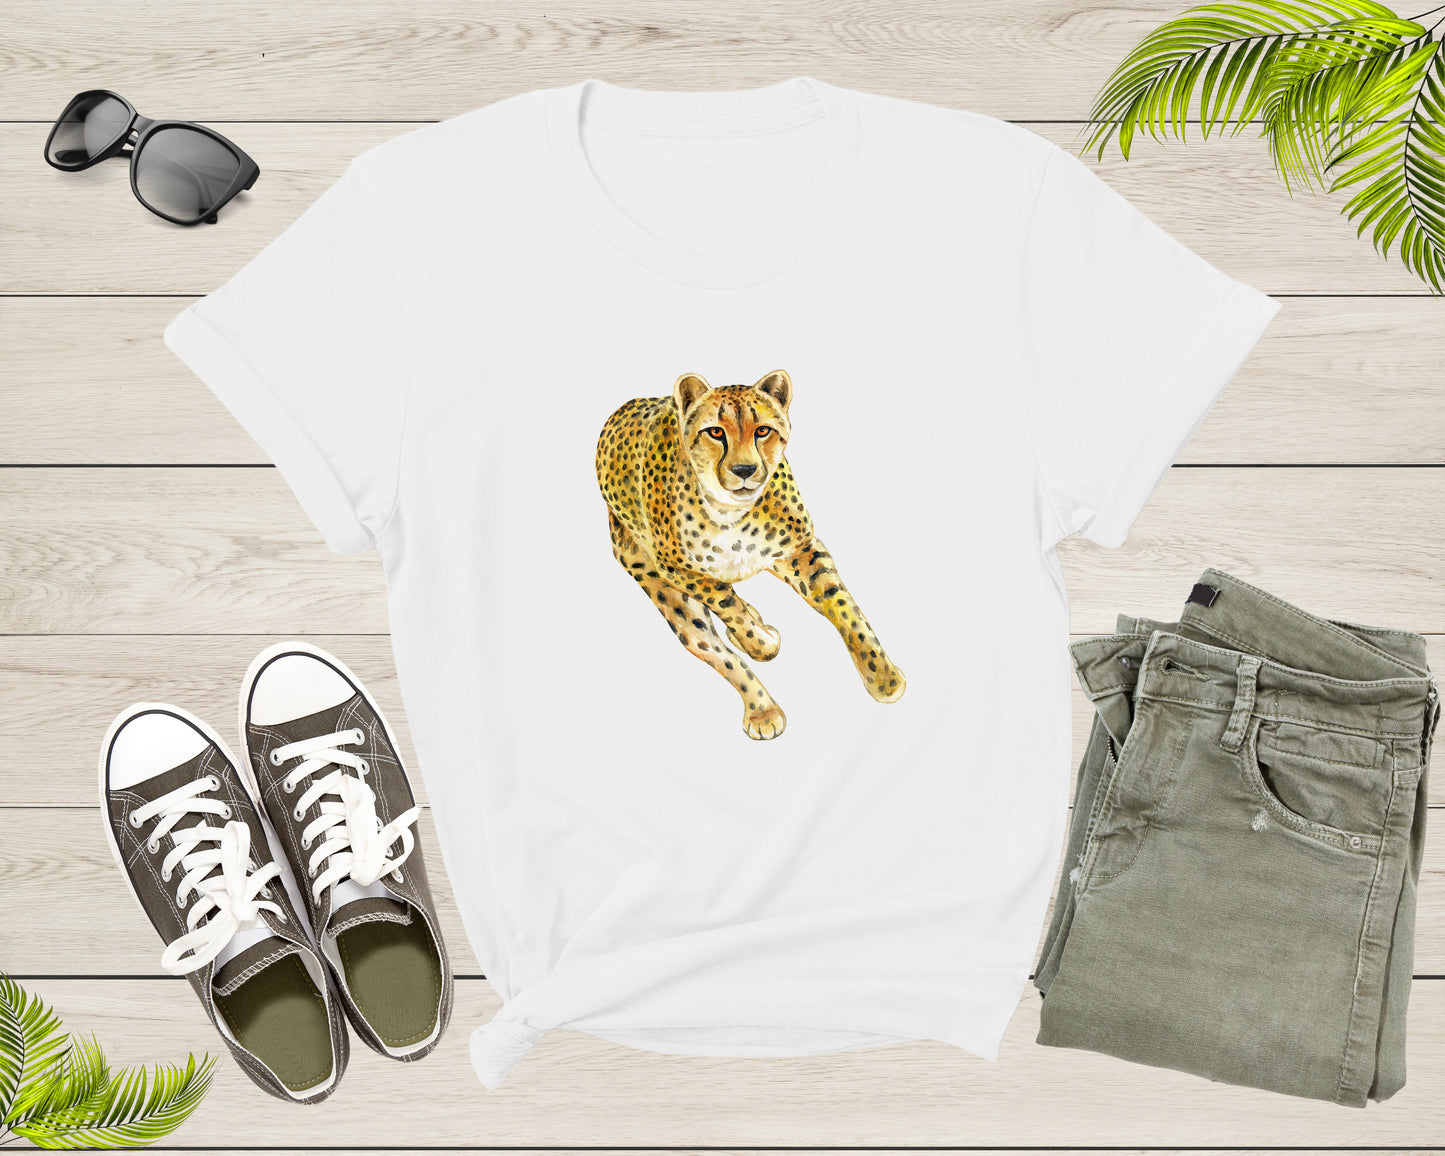 Speedy Running Cheetah Wild Cat Animal Hunting for Prey T-Shirt Cool Cheetah Cat Lover Gift T Shirt for Men Women Kids Boys Girls Tshirt